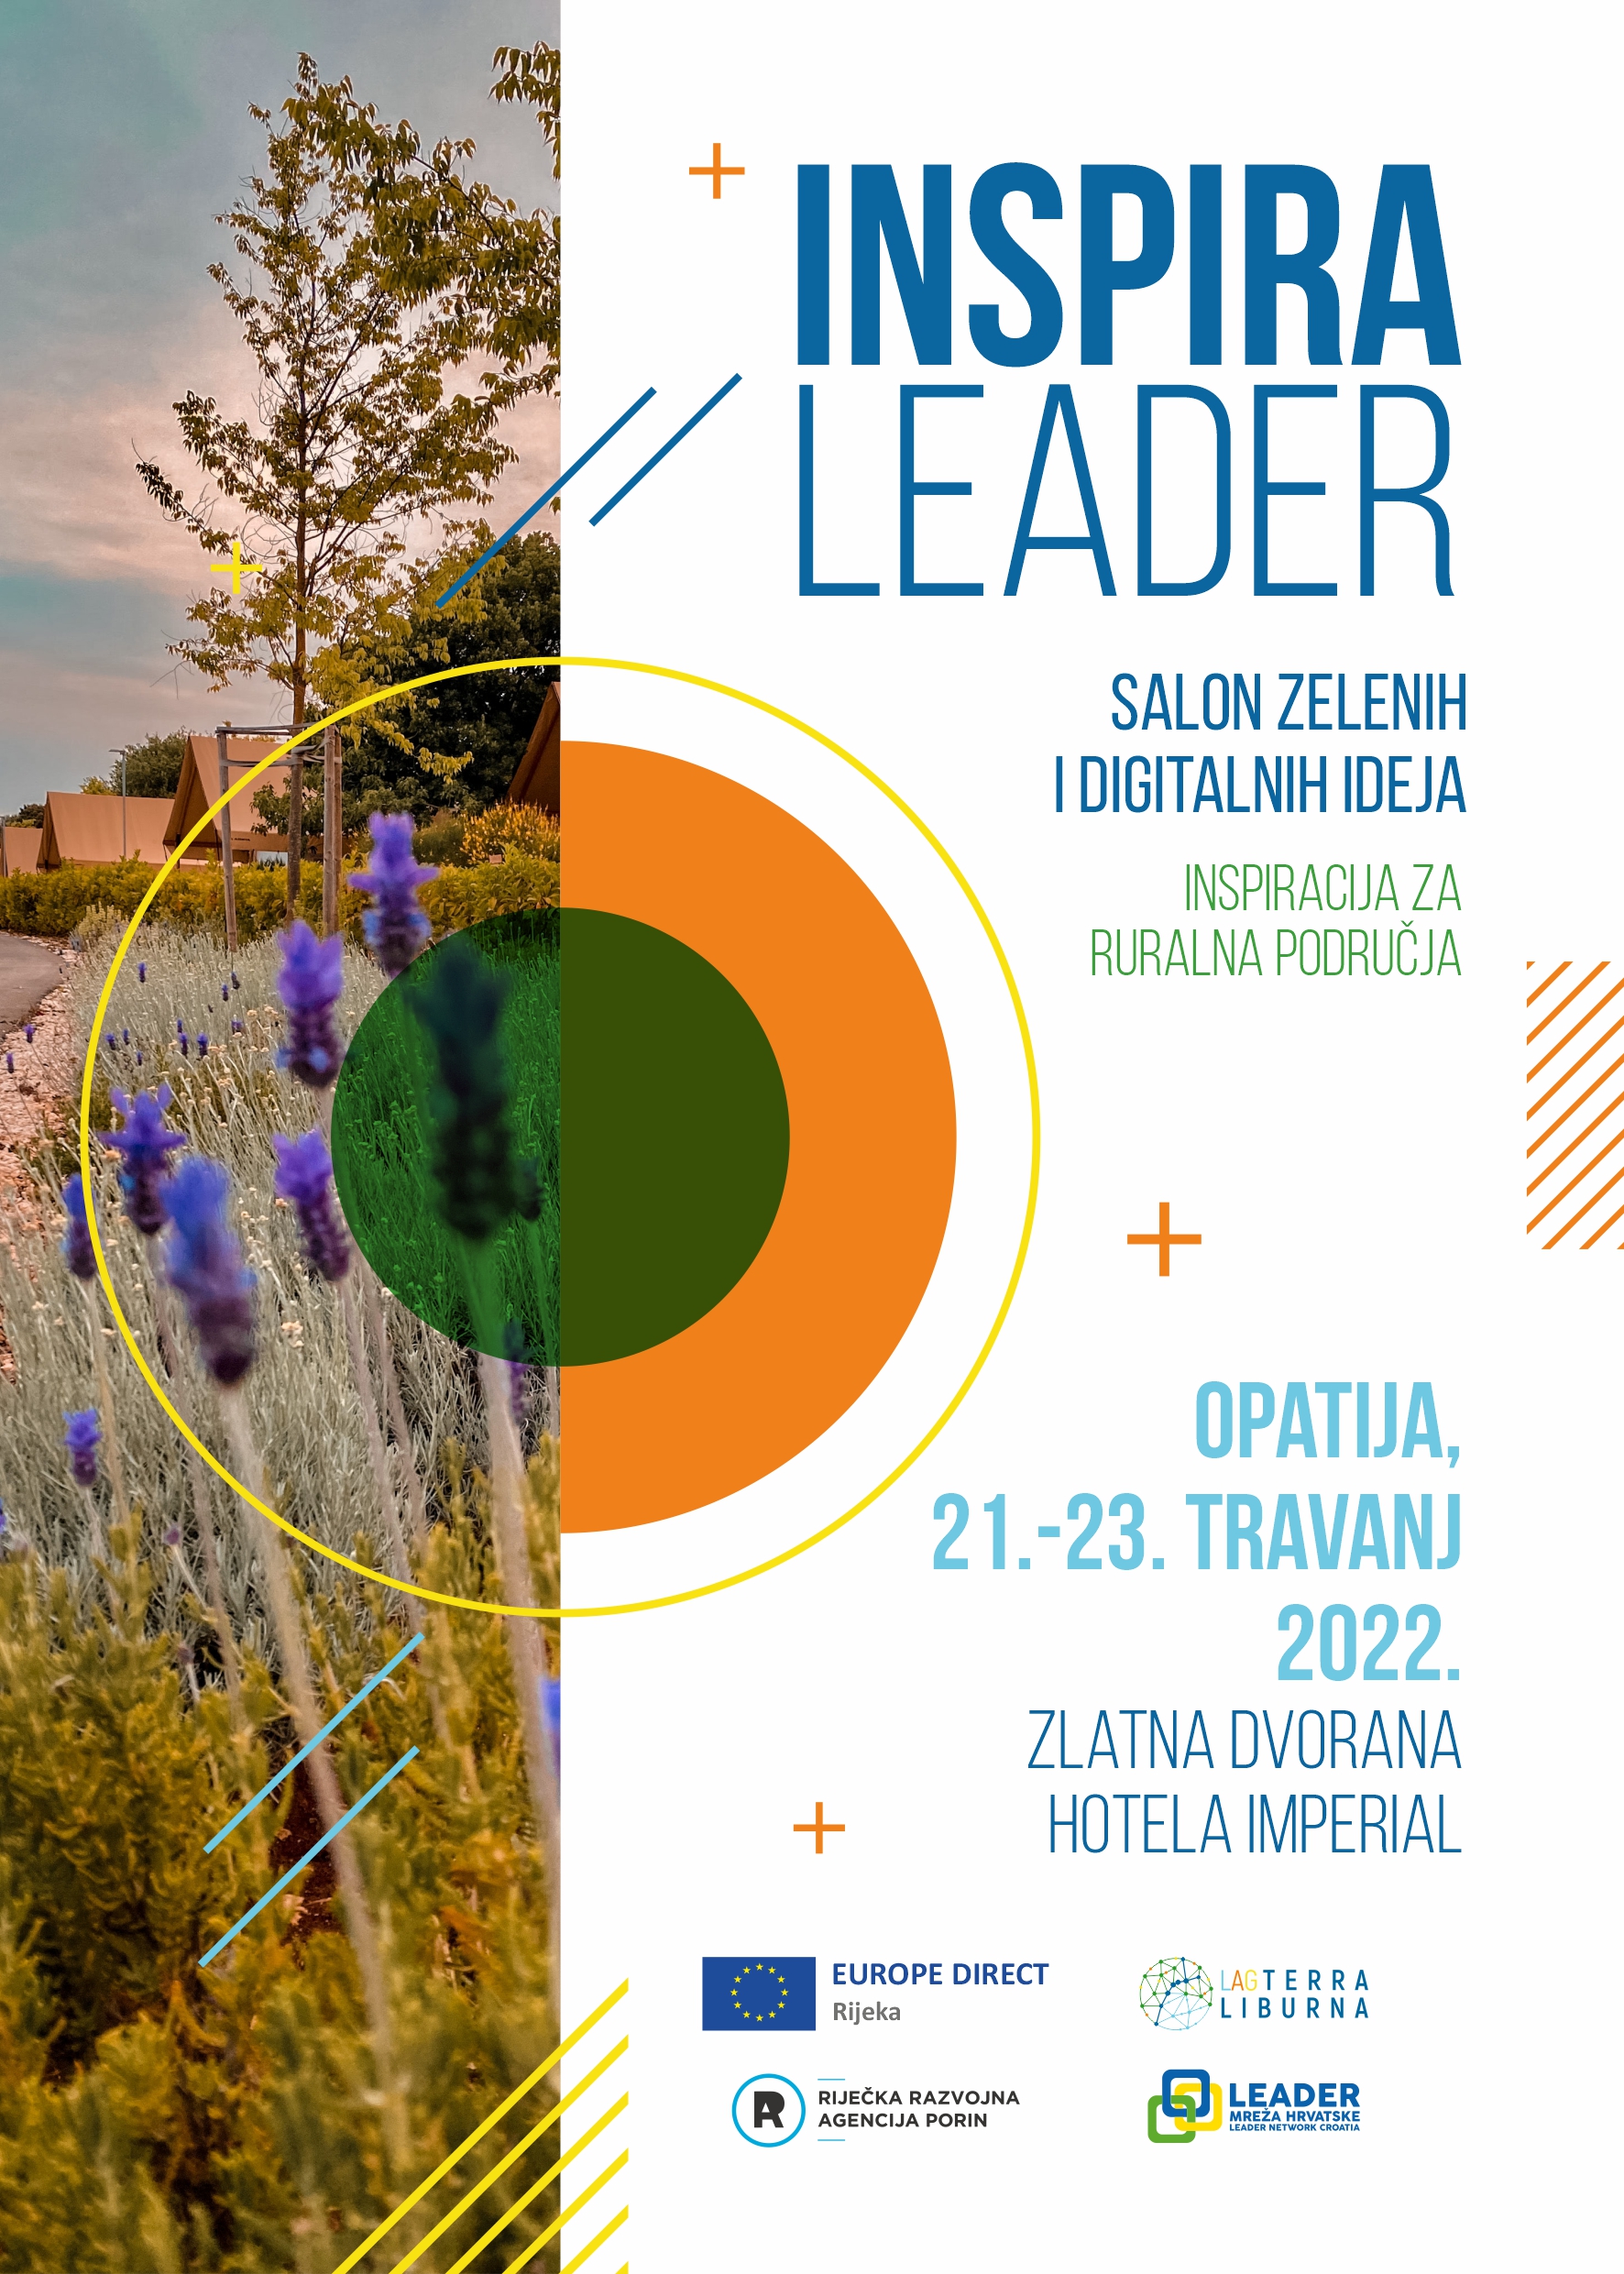 Održana INSPIRA LEADER - konferencija i salon zelenih i digitalnih ideja, Opatija,21.-23.04.2022.